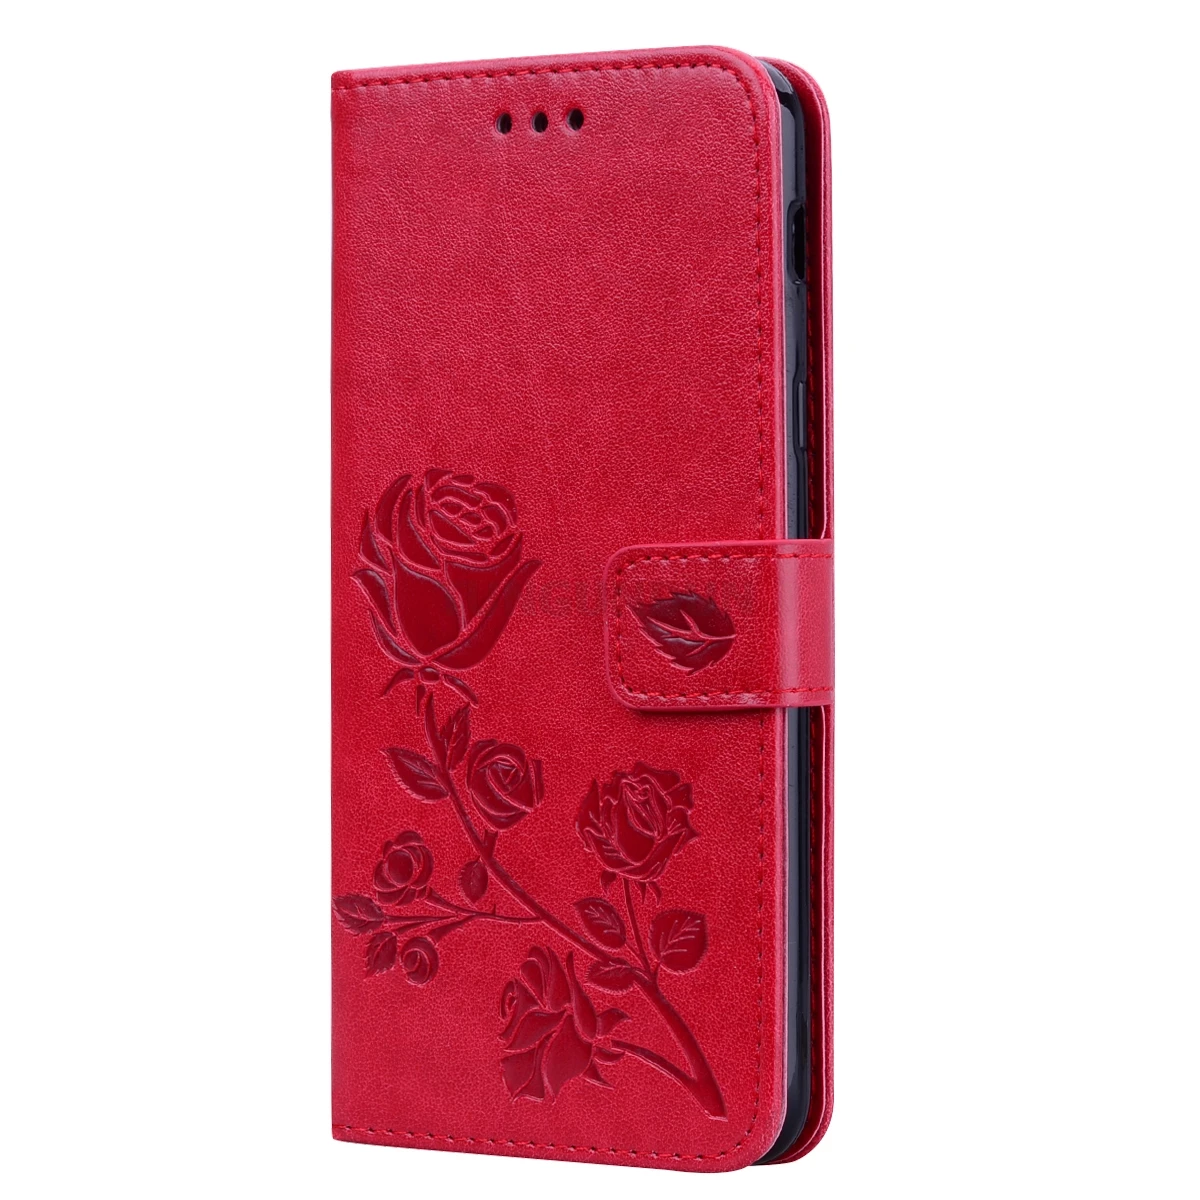 Meizu M6 Note чехол для телефона Maze M5 M5c M5s M6s M6t s6 Not Meuzu Meizy Fip кожаный чехол сумка на Meise Maisie M 5c - Цвет: CX Red